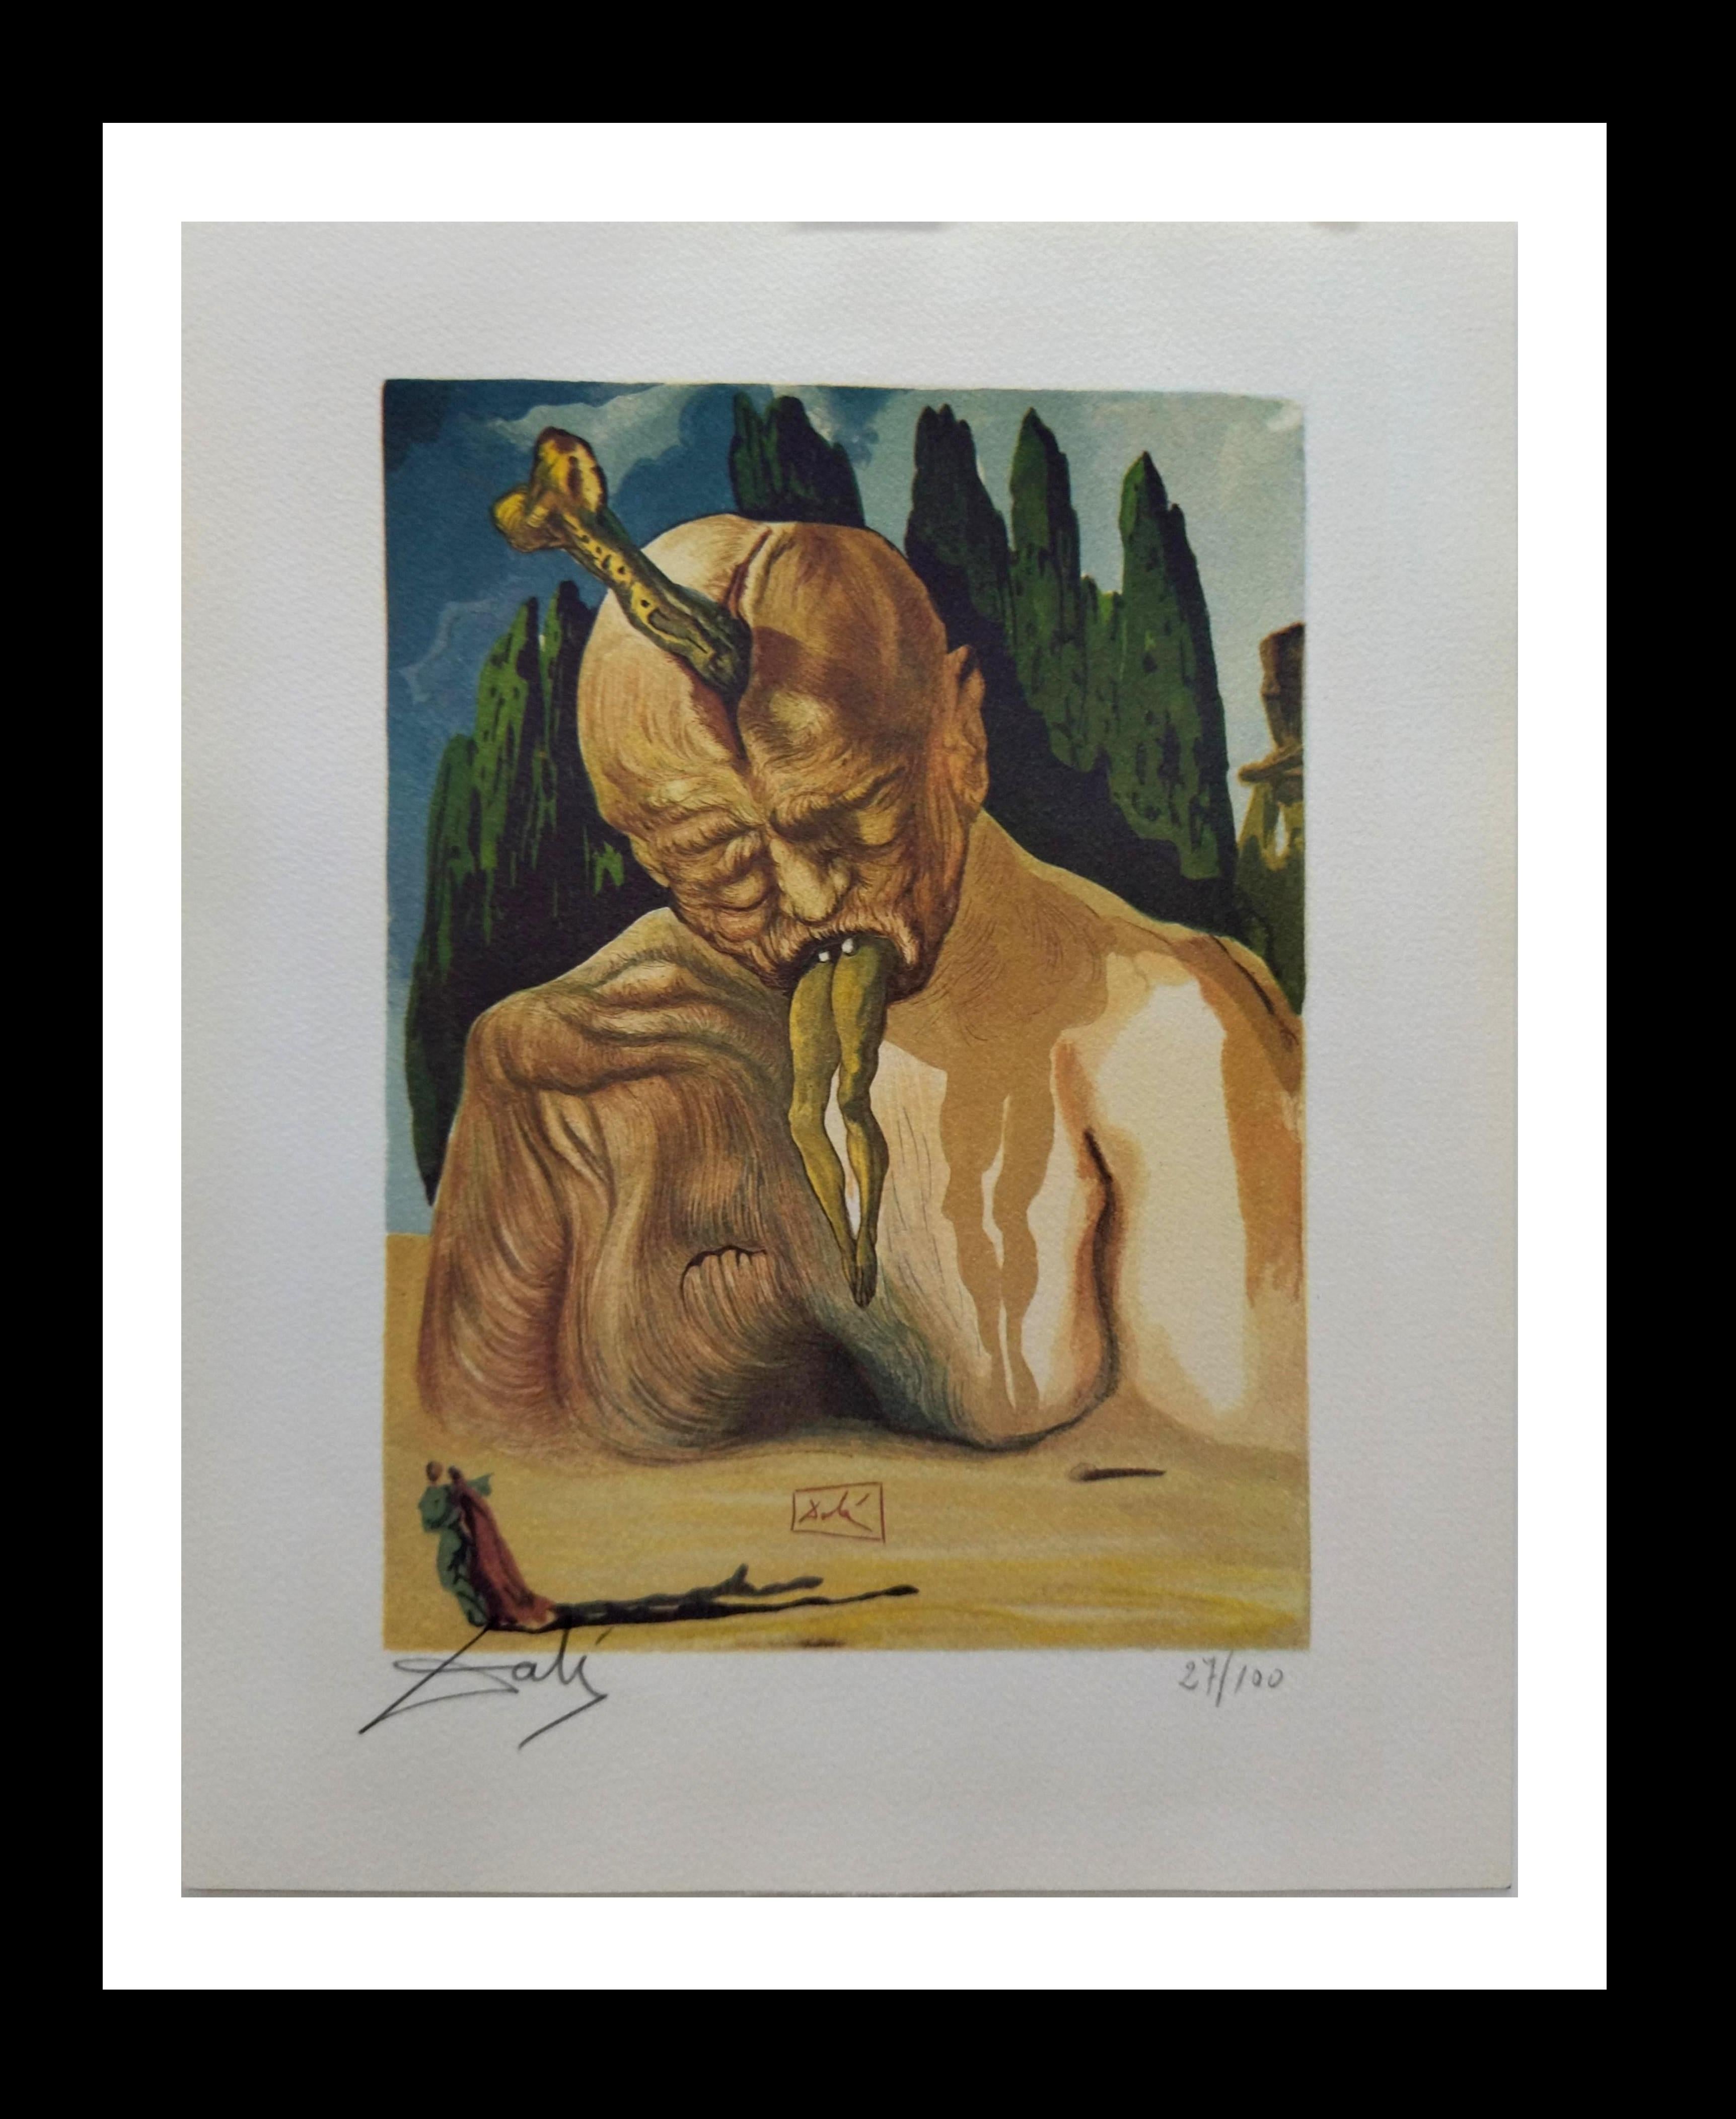 Salvador Dalí Abstract Print - Dali   Divina Comedia engraving painting